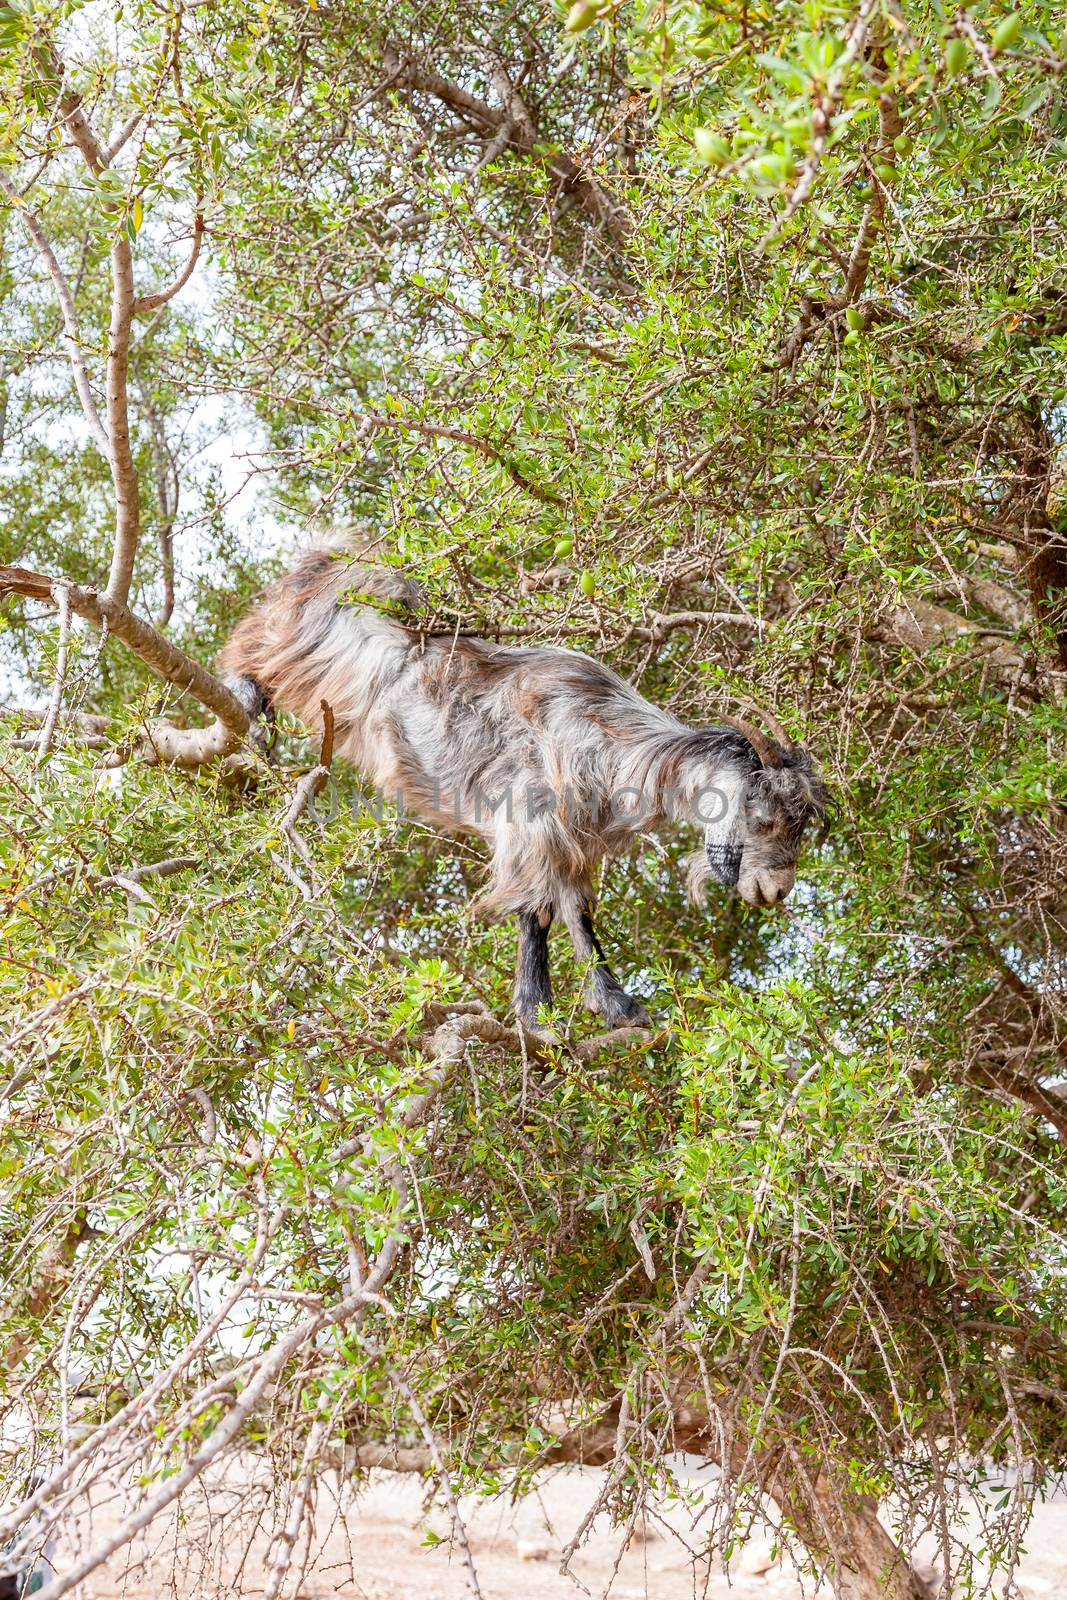 The Morocco Goat feeding in argan tree